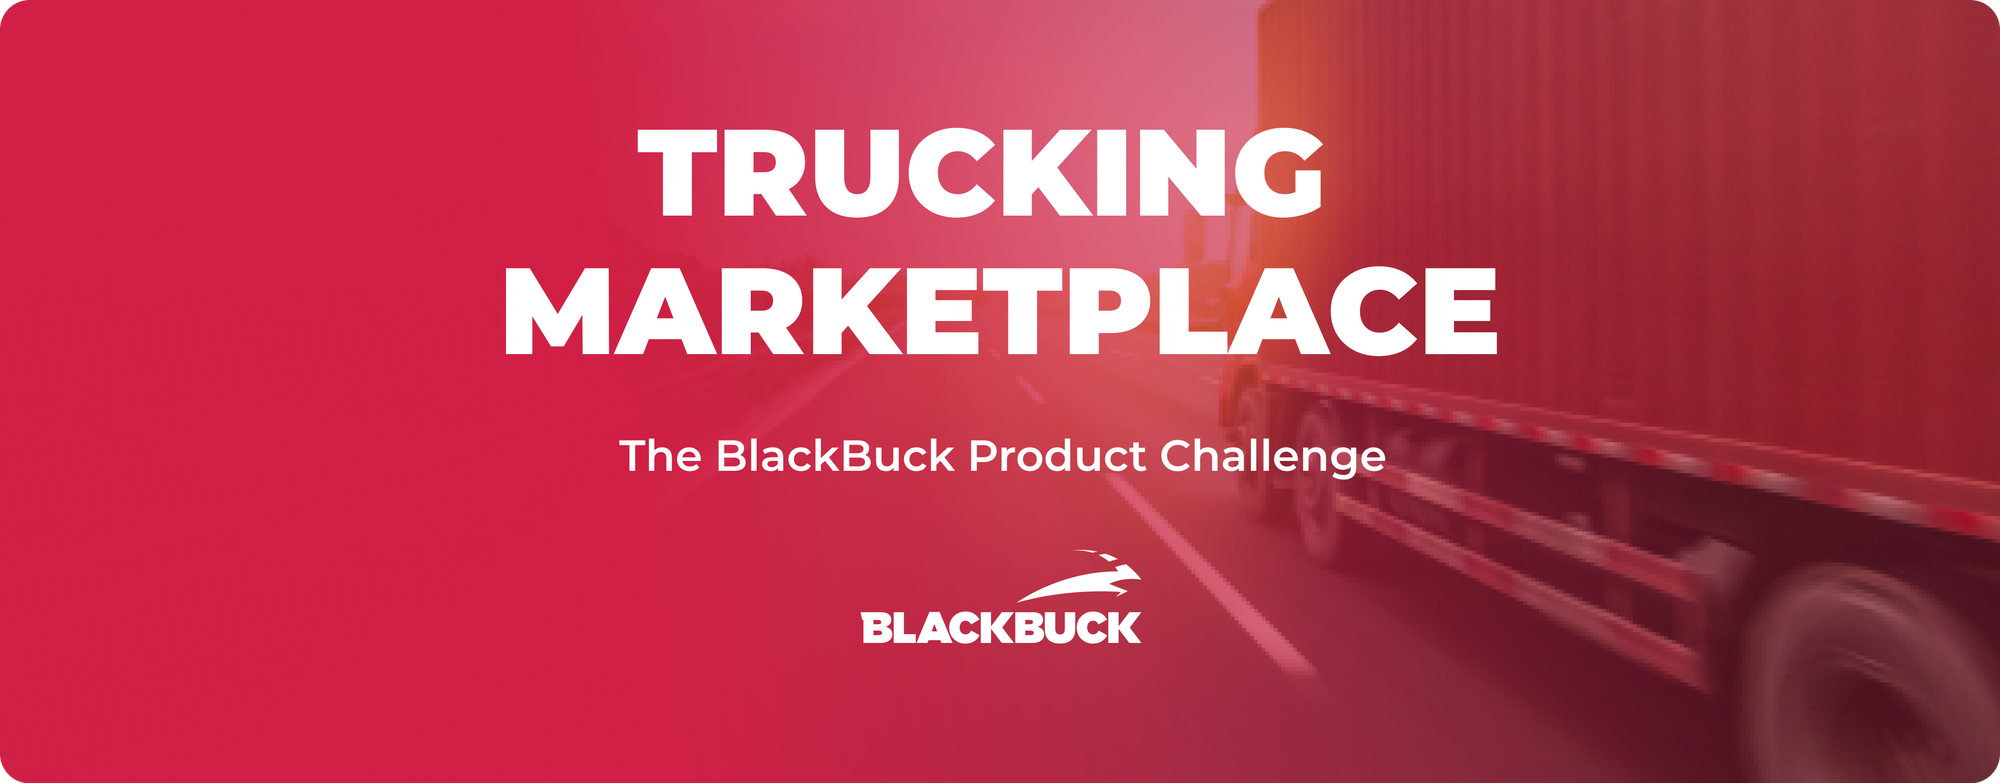 Trucking Marketplace: The BlackBuck Product Challenge!